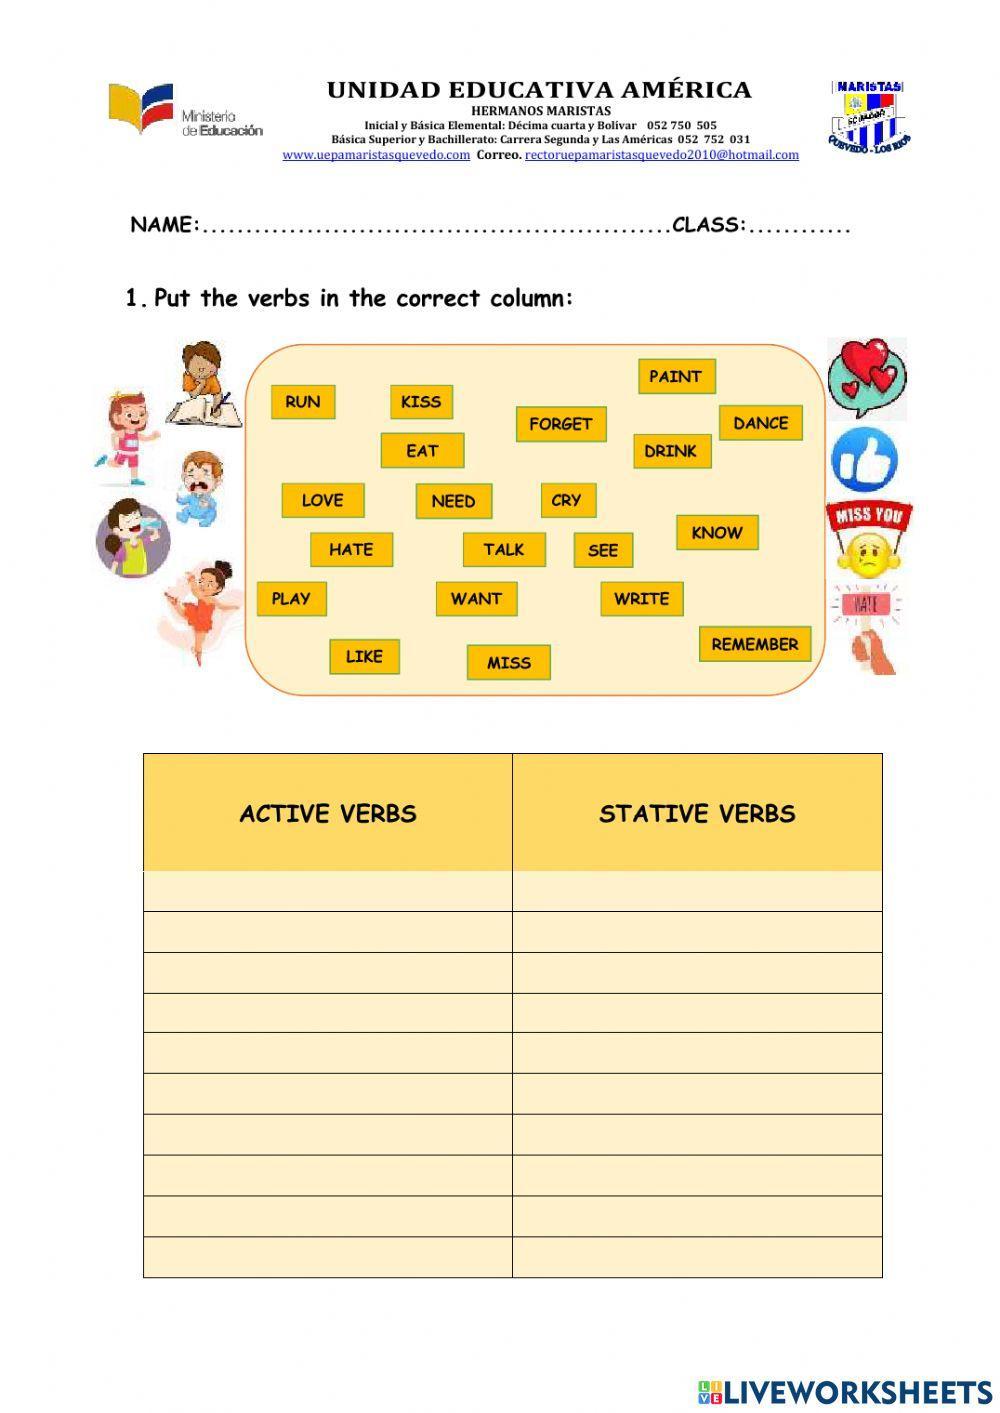 Active verbs and stative verbs